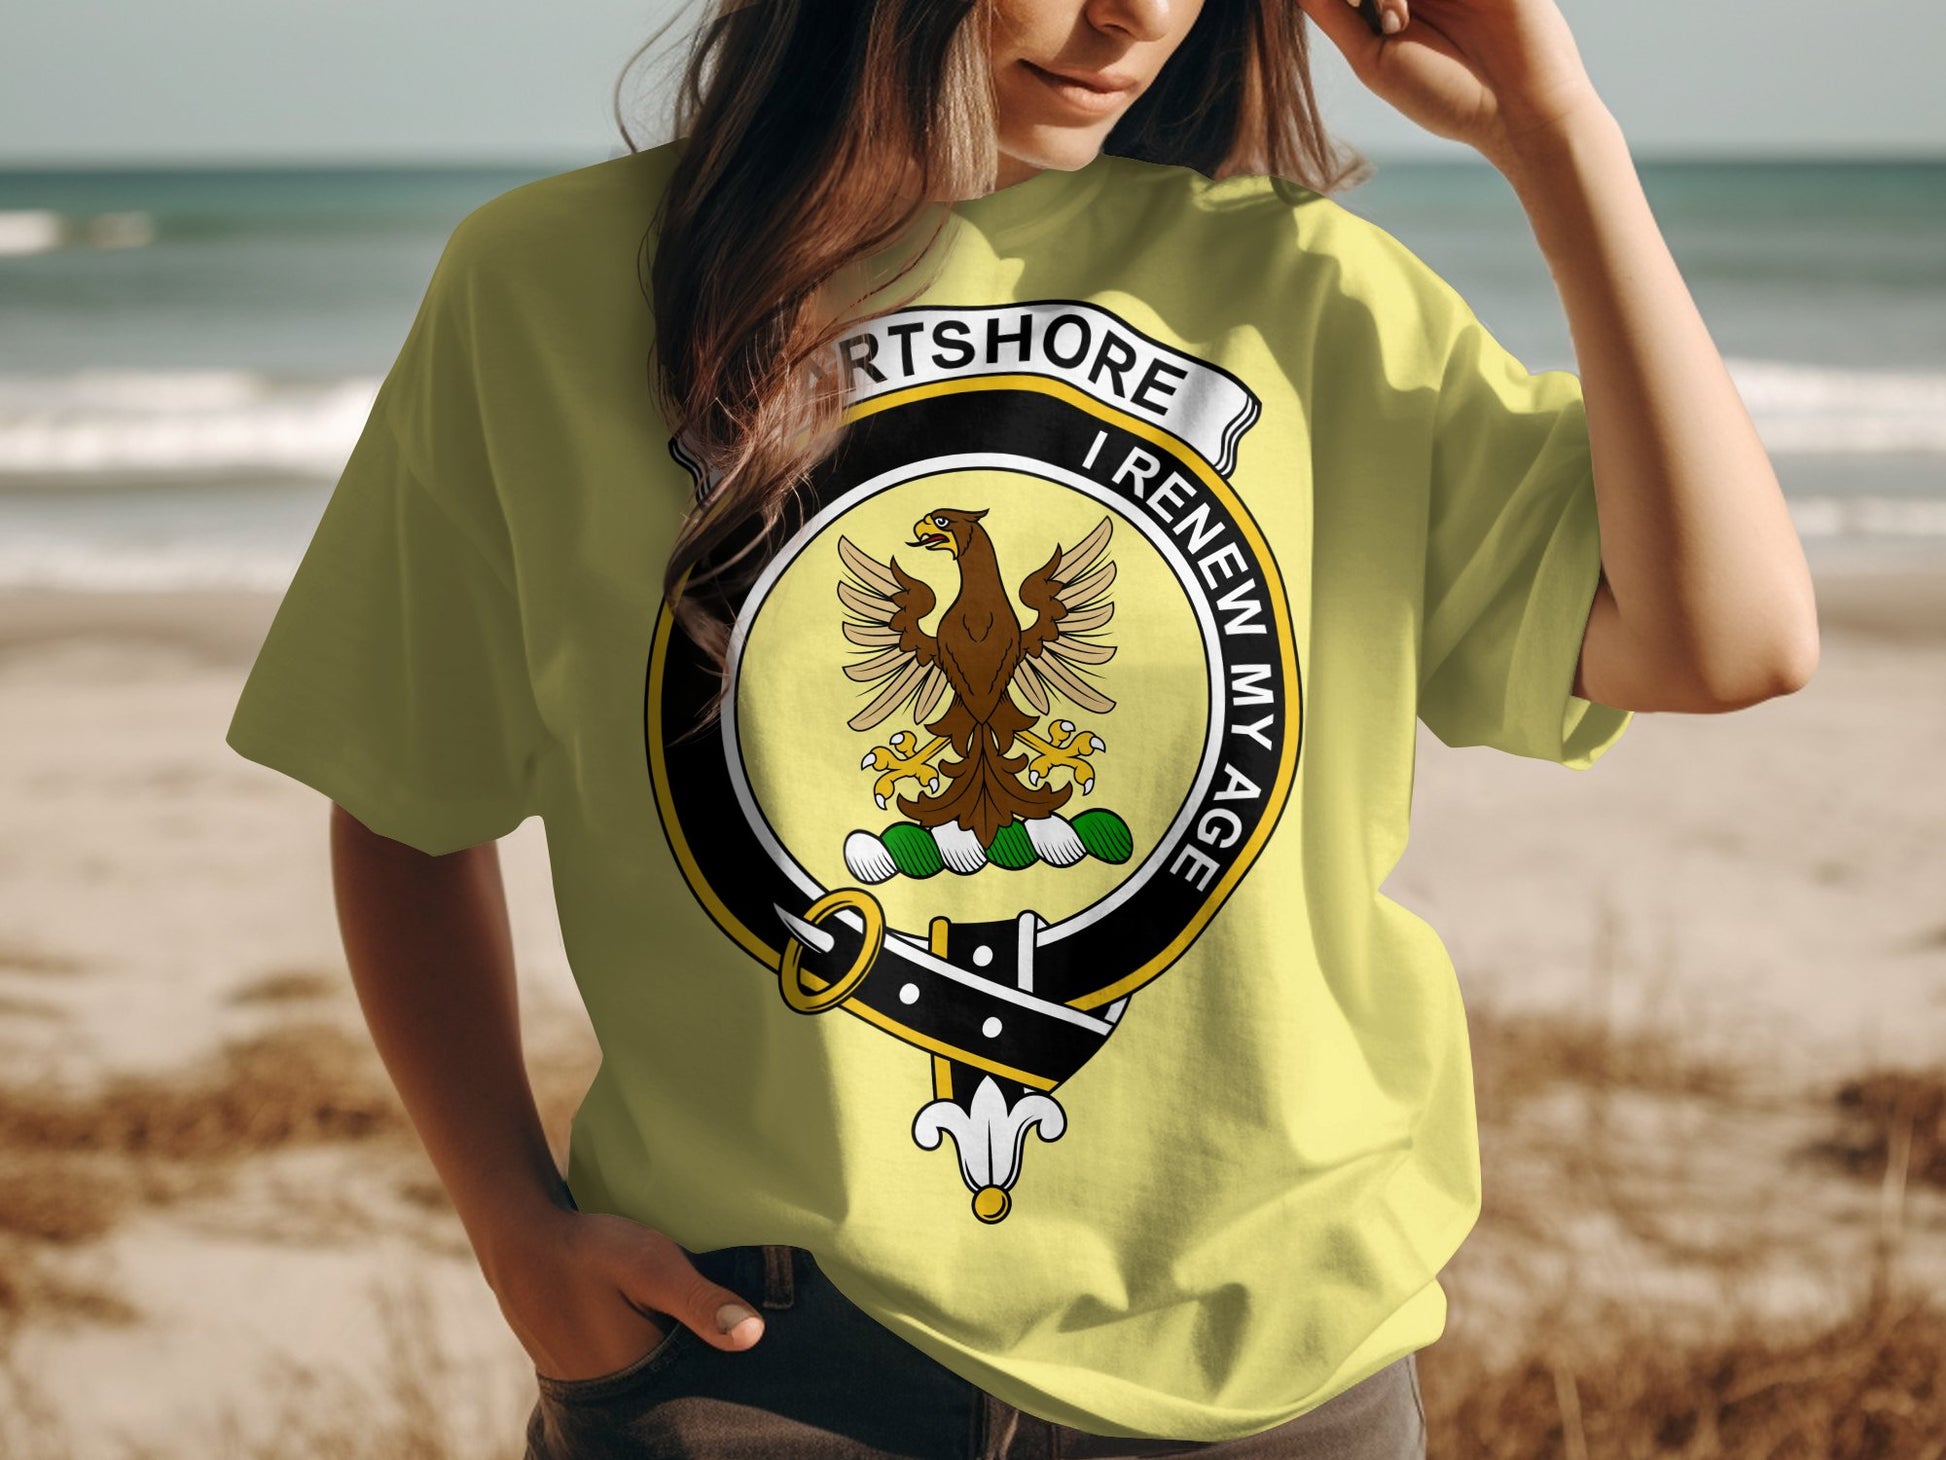 Gartshore Scottish Clan Crest Highland Games T-Shirt - Living Stone Gifts